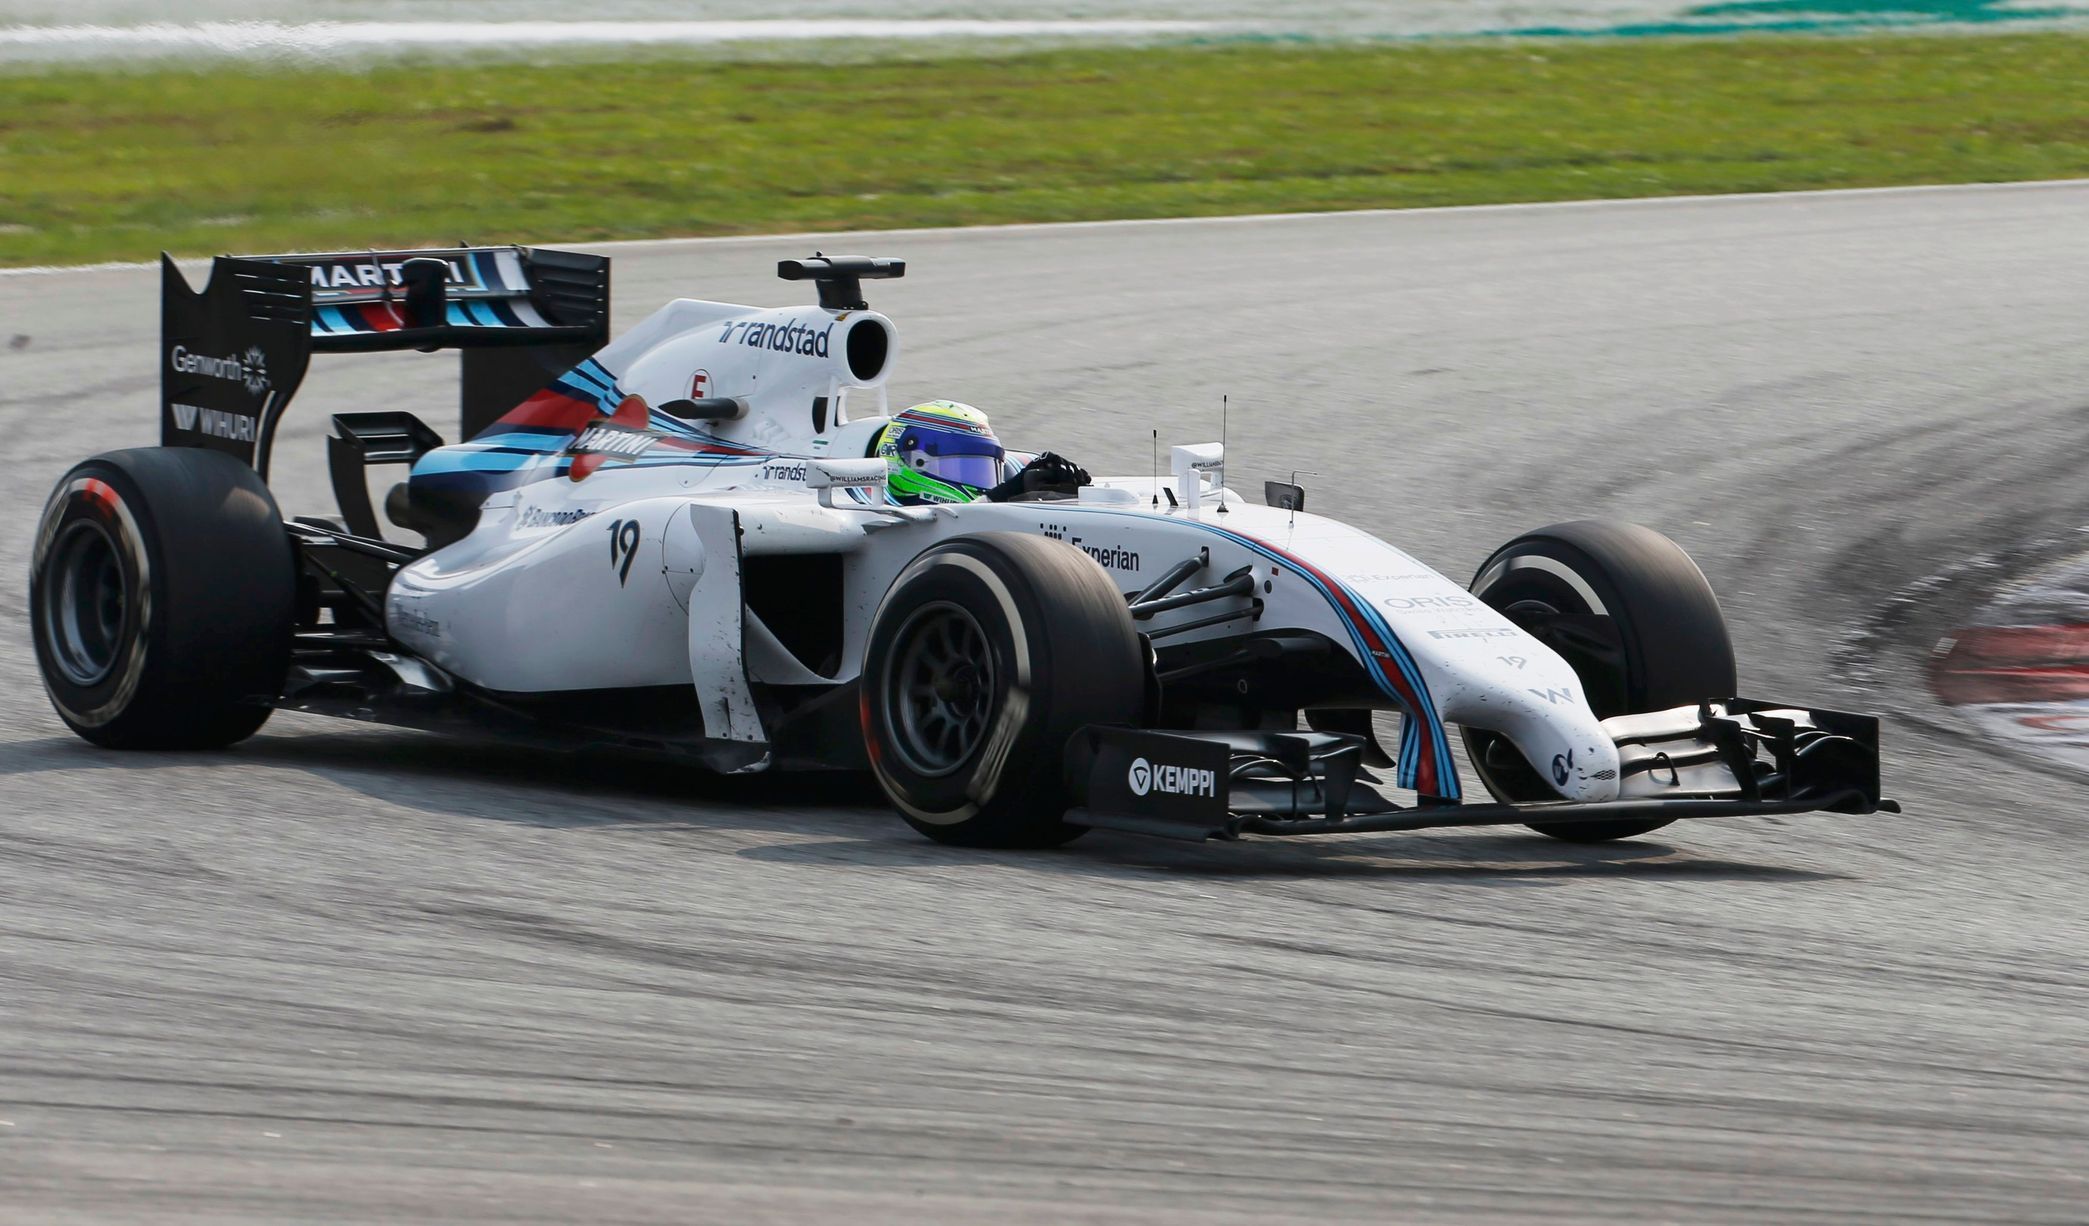 Williams Formula One driver Massa of Brazil takes a corner during the Malaysian F1 Grand Prix at Sepang International Circuit outside Kuala Lumpur